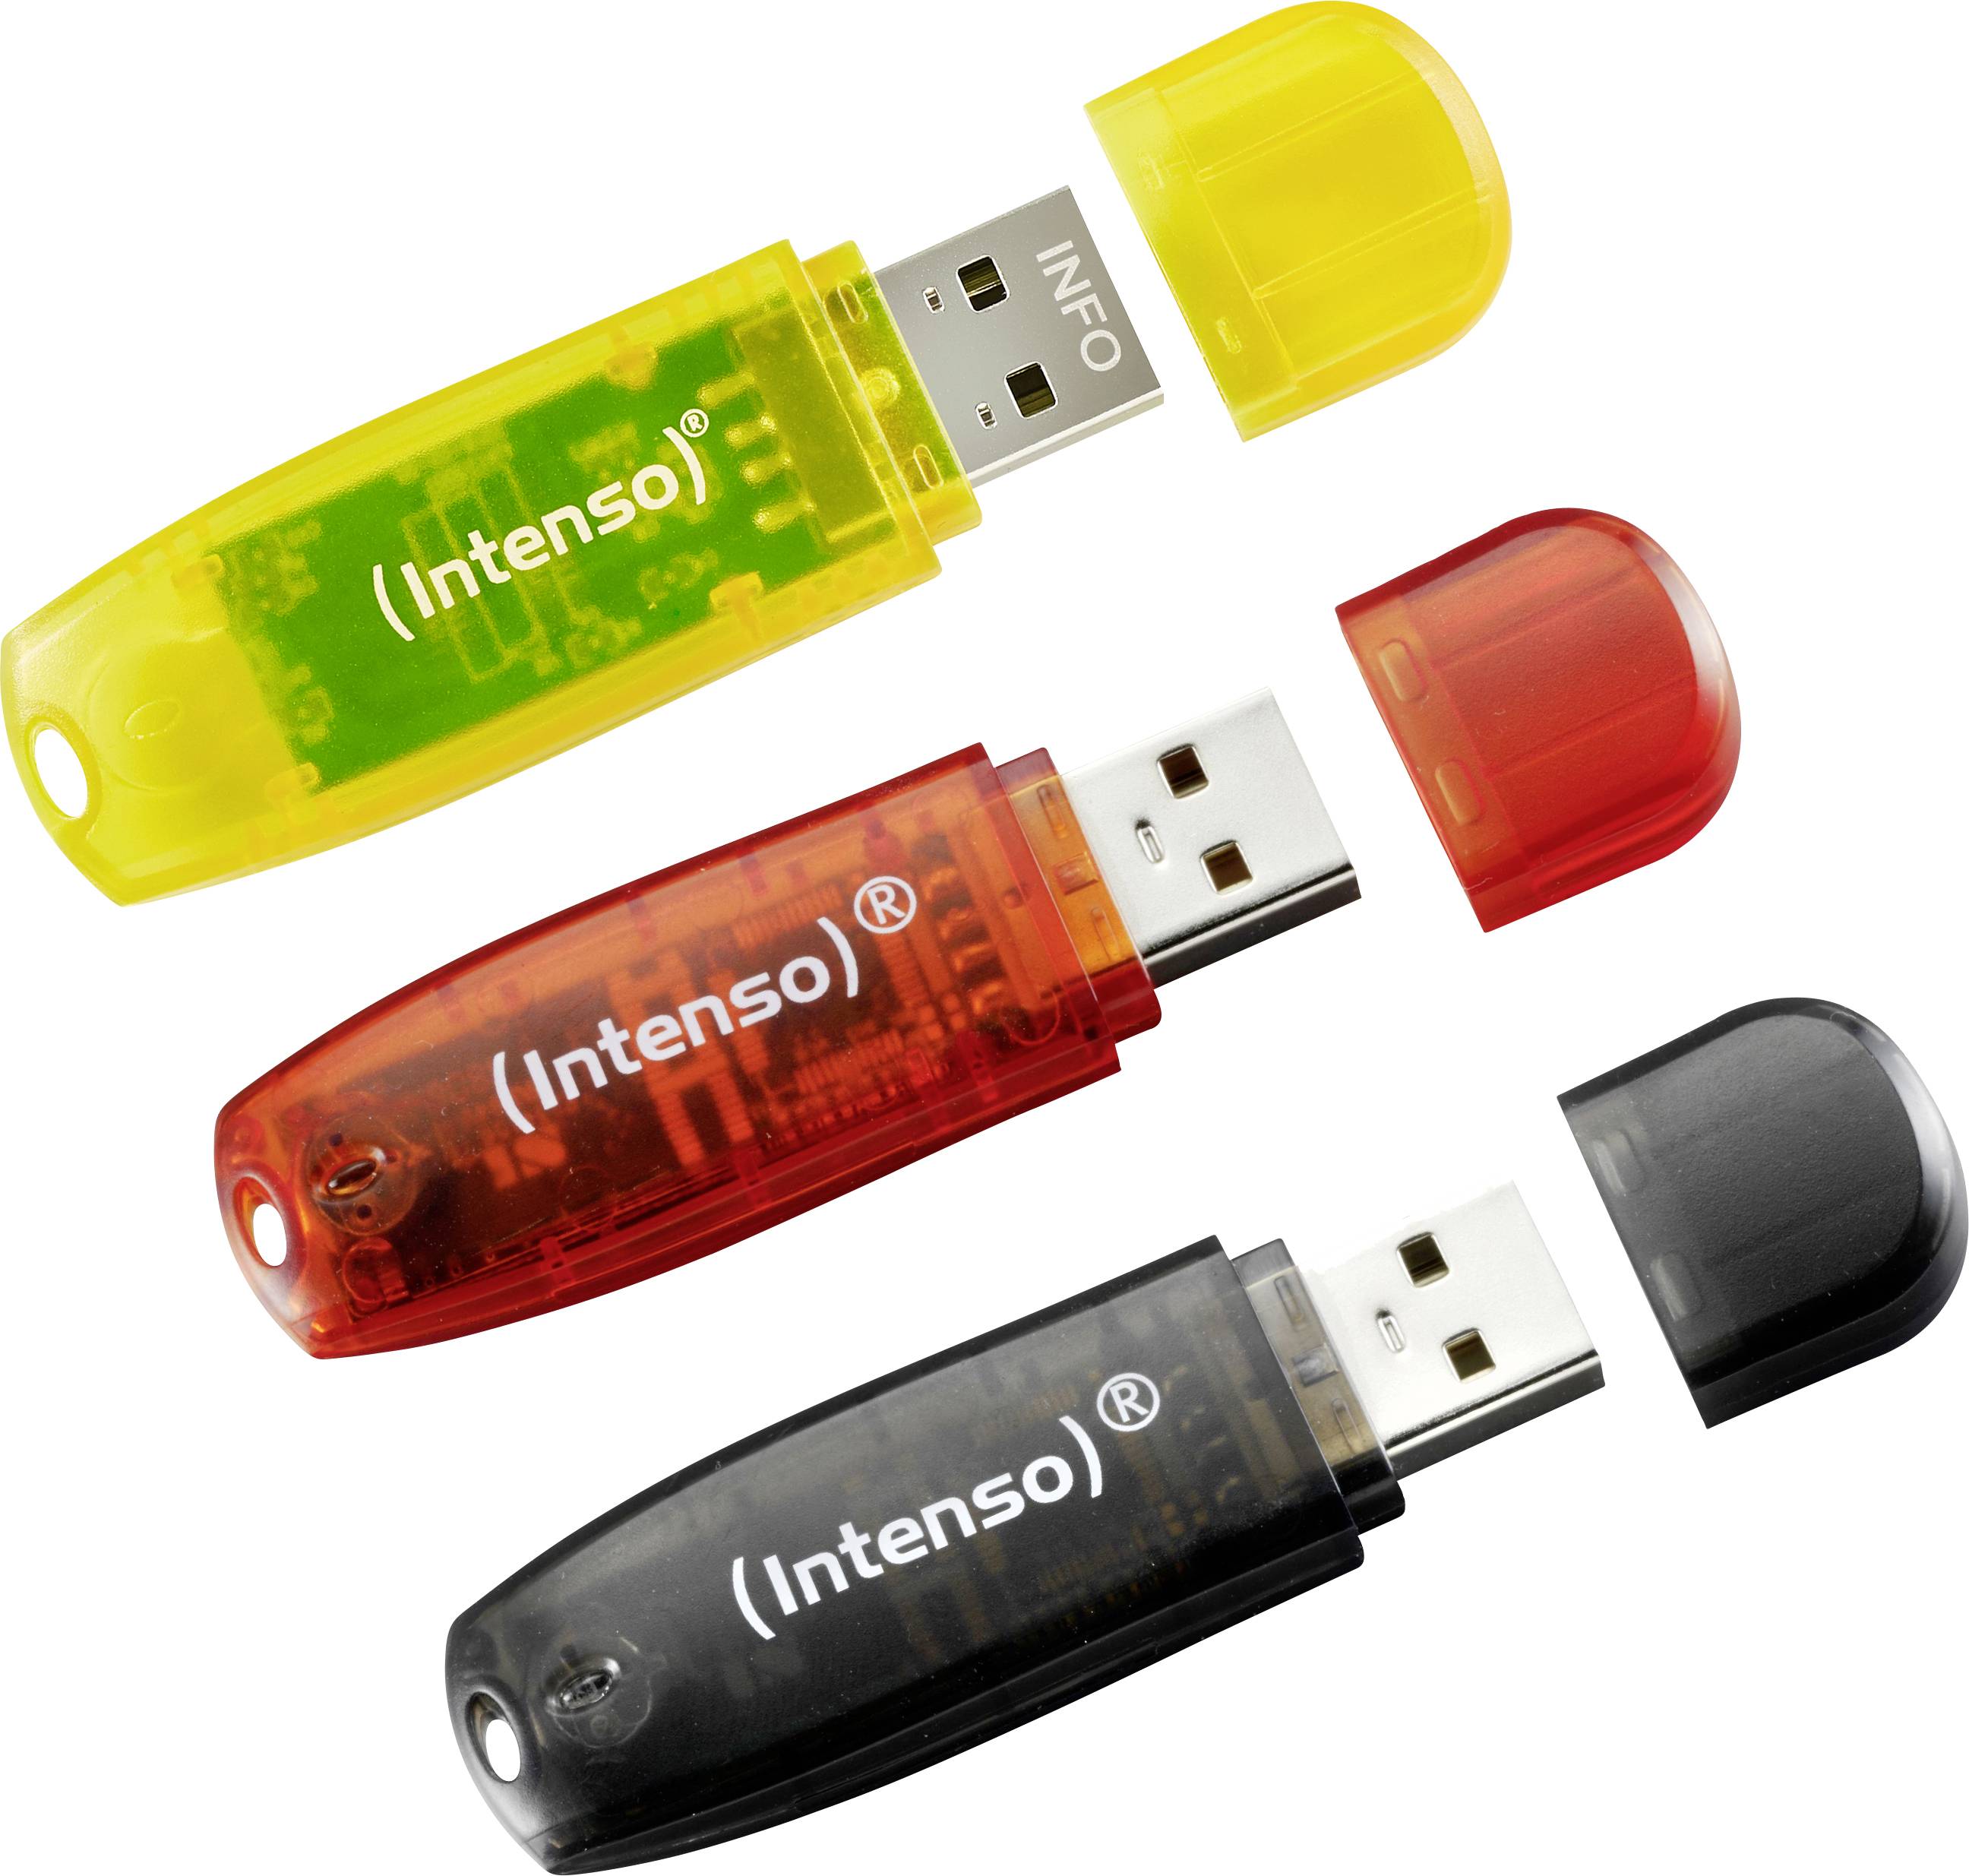 Флешка intenso Rainbow line 2gb. Флешка intenso Rainbow line 32gb. Lora USB стик. FIRMWAREREVISION=model=intenso Rainbow line USB device.